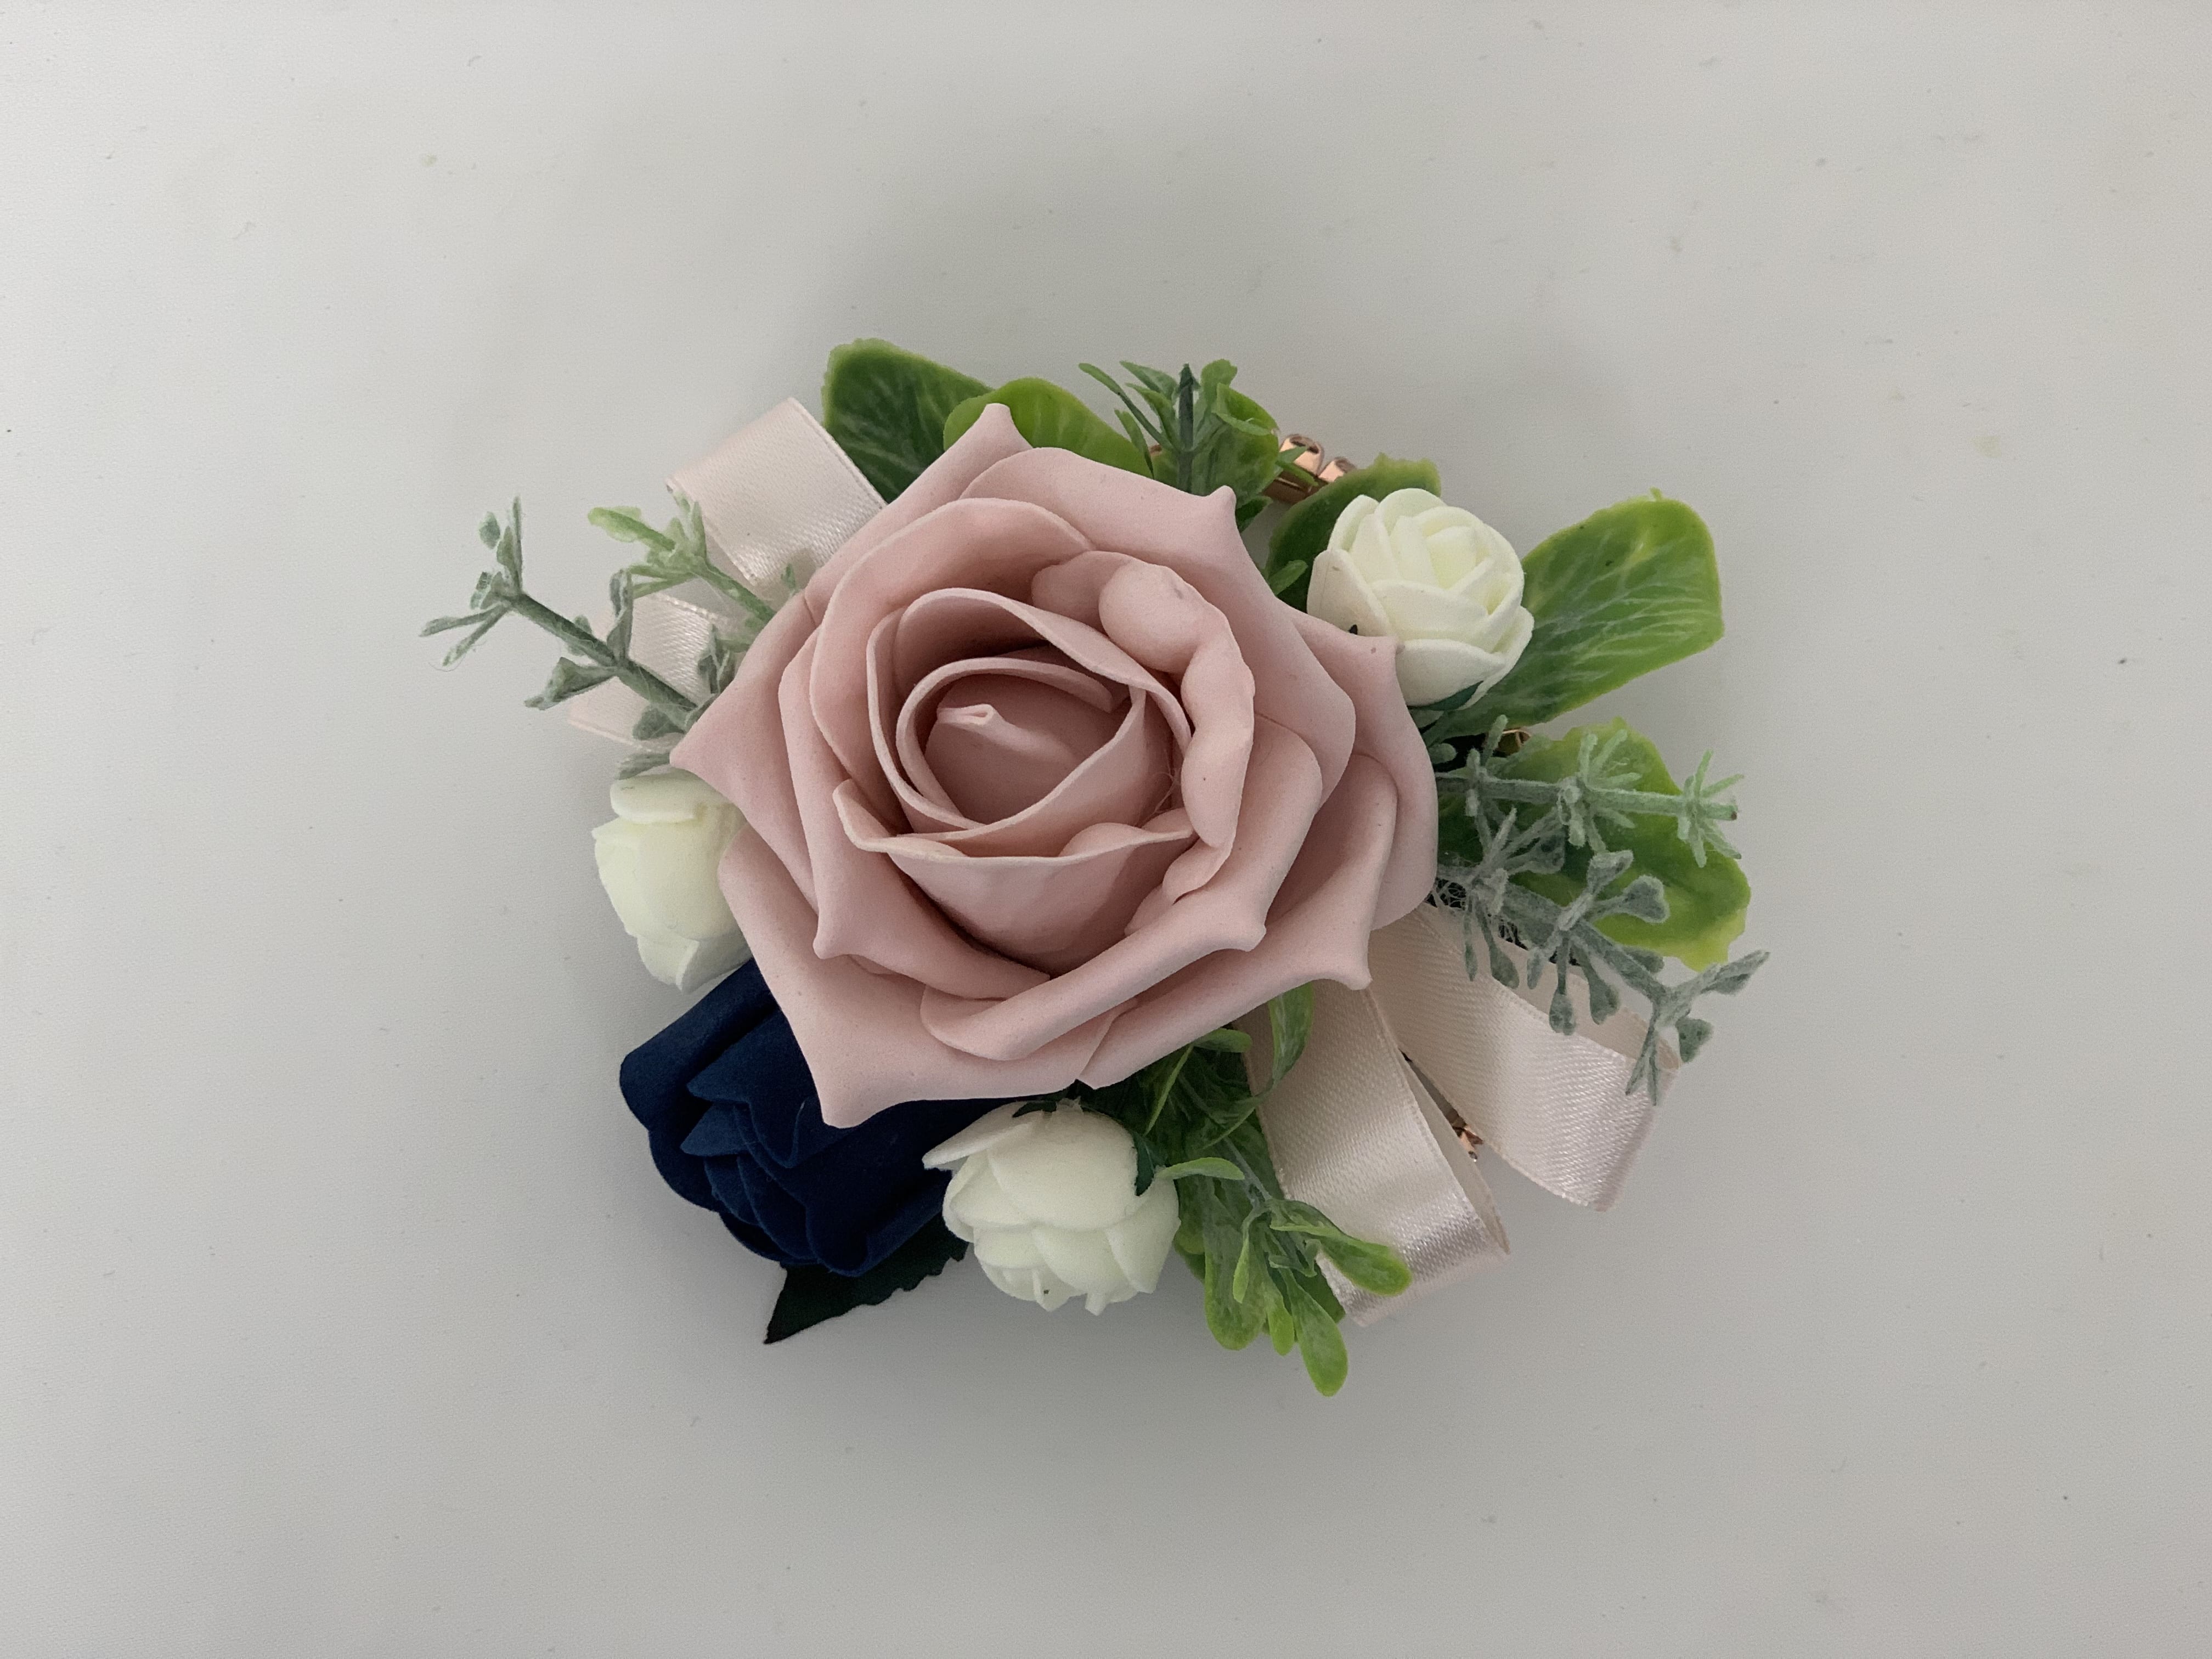 LangRay Wrist Flower Brooch Pink Flower Corsage for Wedding Party Set of 2  Wedding Prom Bracelet